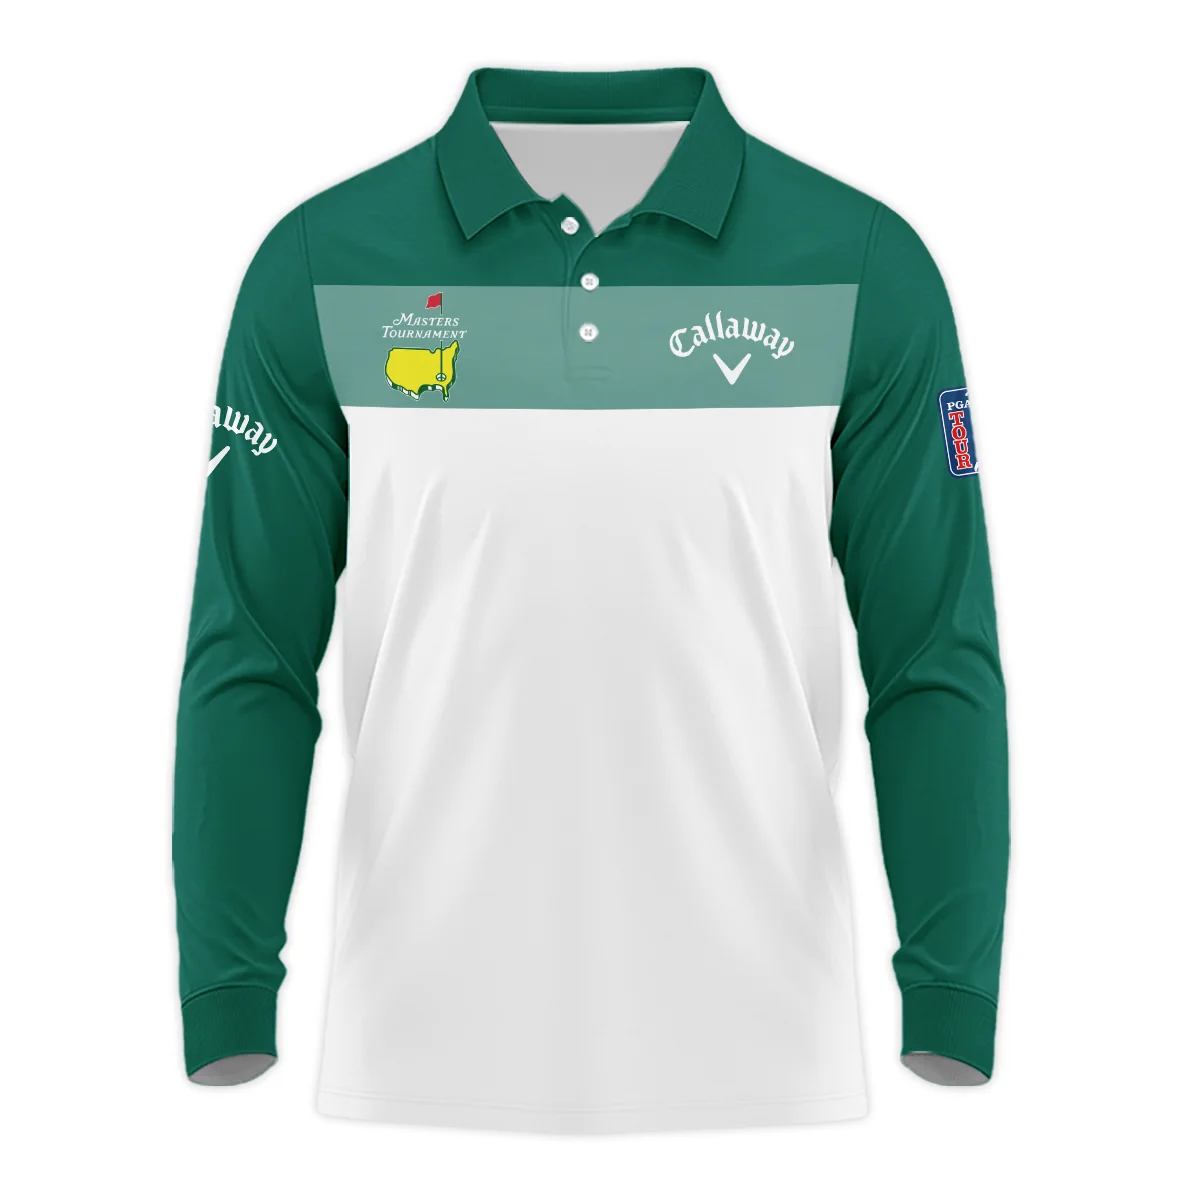 Golf Masters Tournament Callaway Zipper Hoodie Shirt Sports Green And White All Over Print Zipper Hoodie Shirt